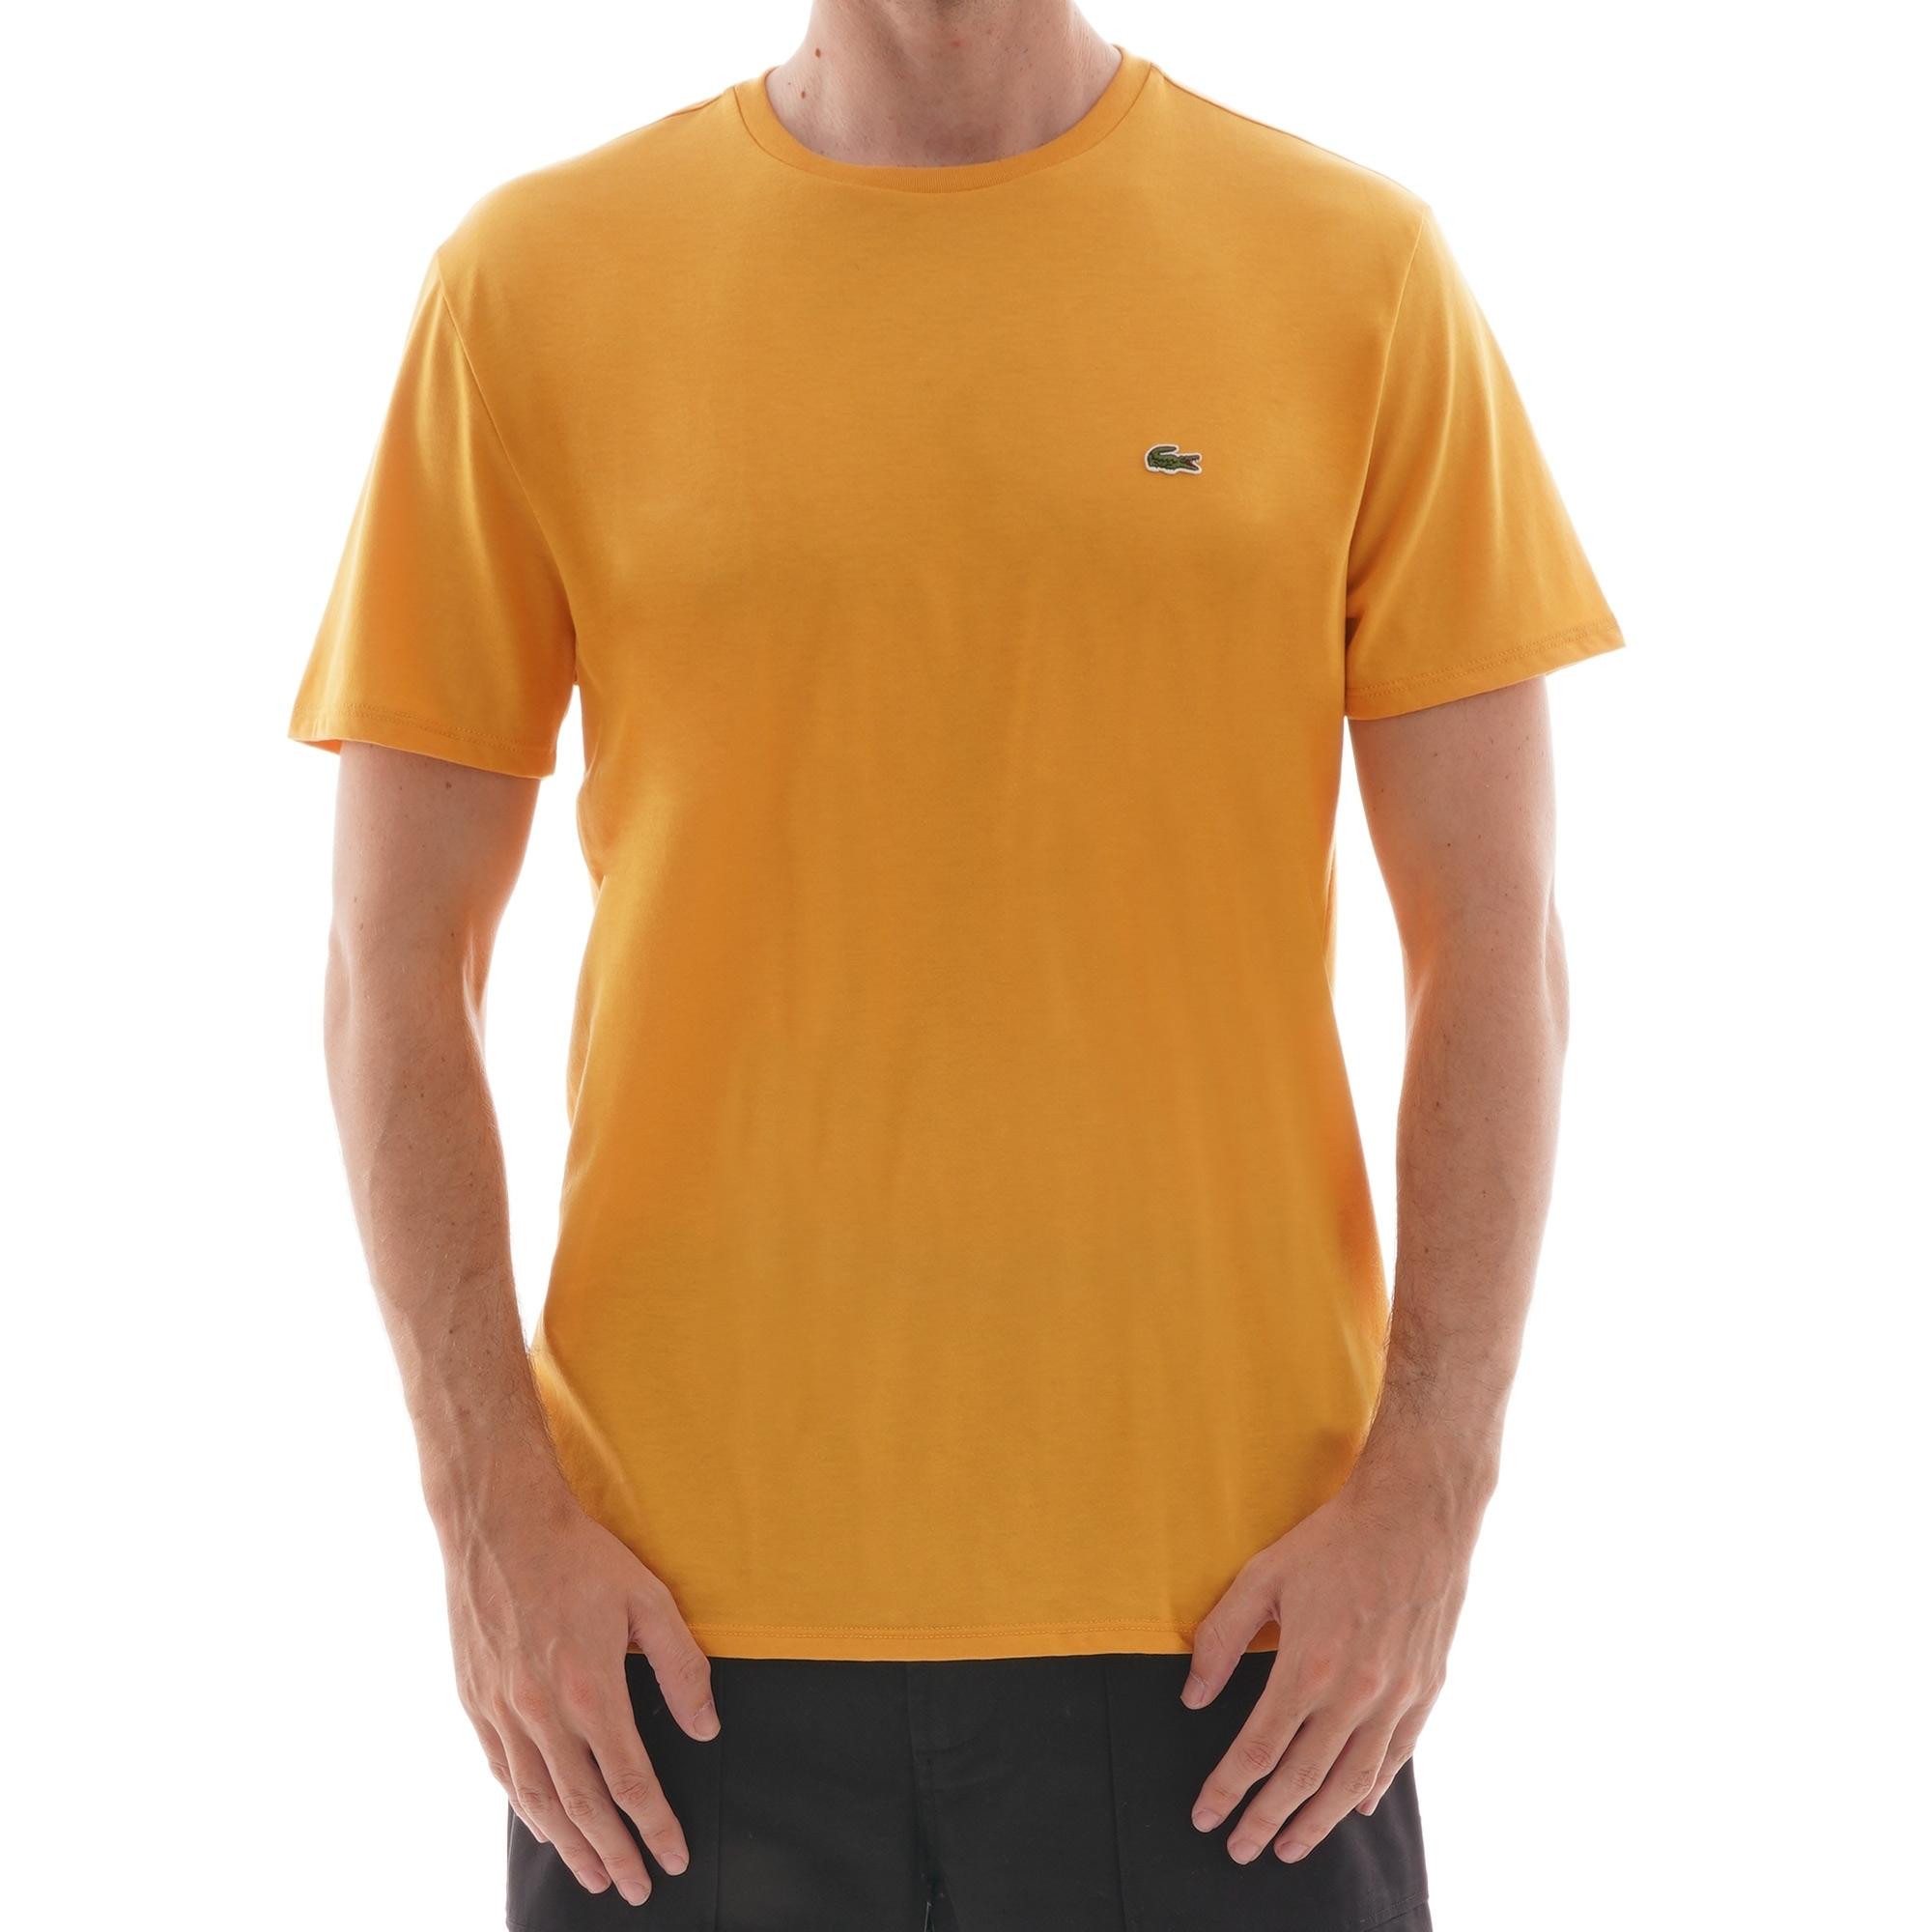 lacoste t shirt yellow